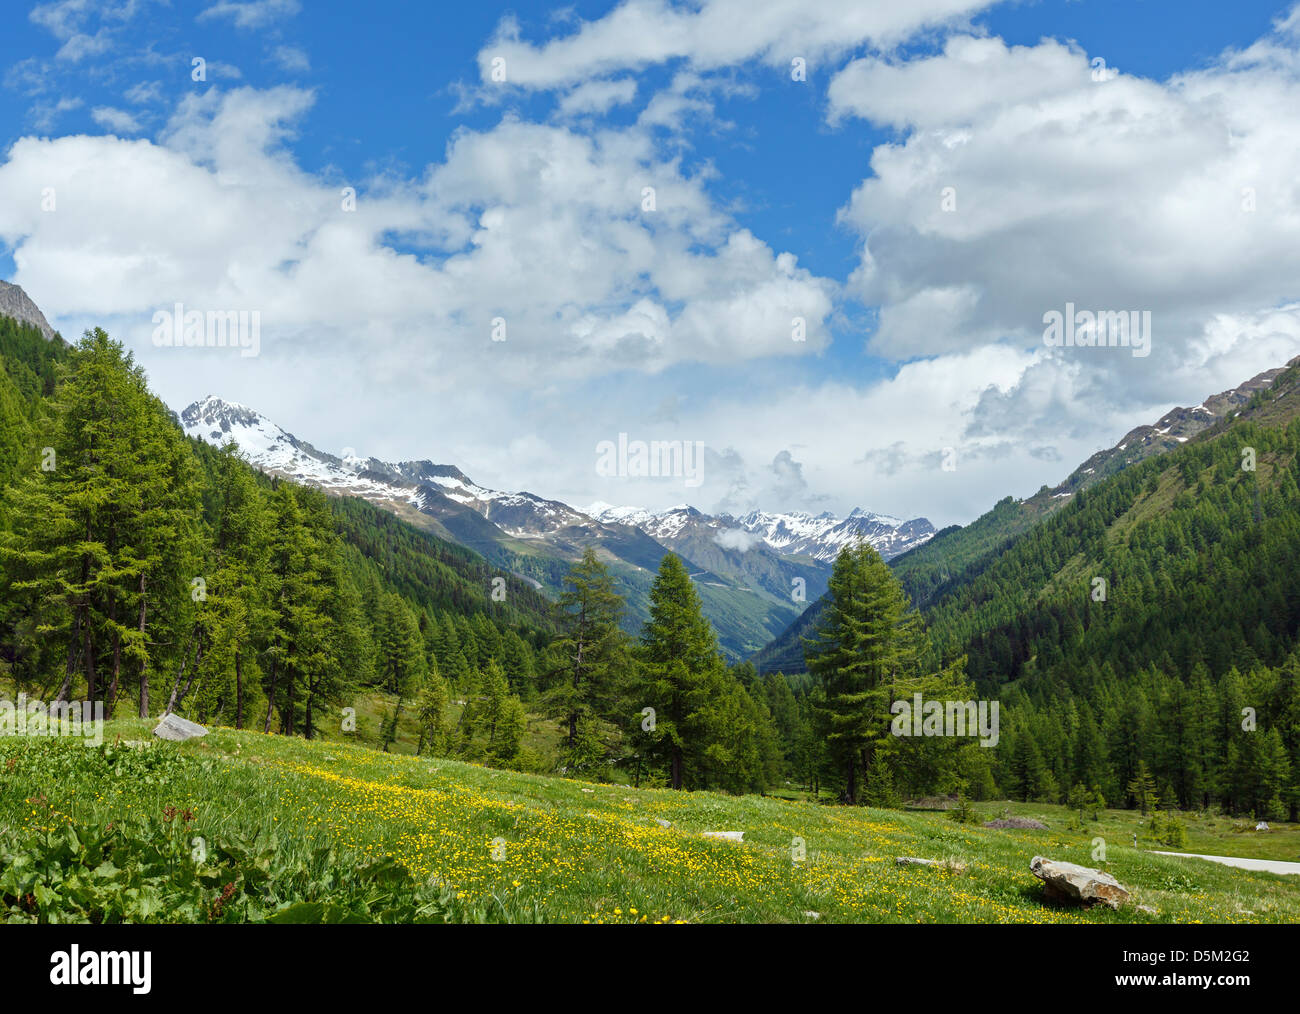 Yellow dandelion flowers on summer mountain slope (Alps, Switzerland) Stock Photo